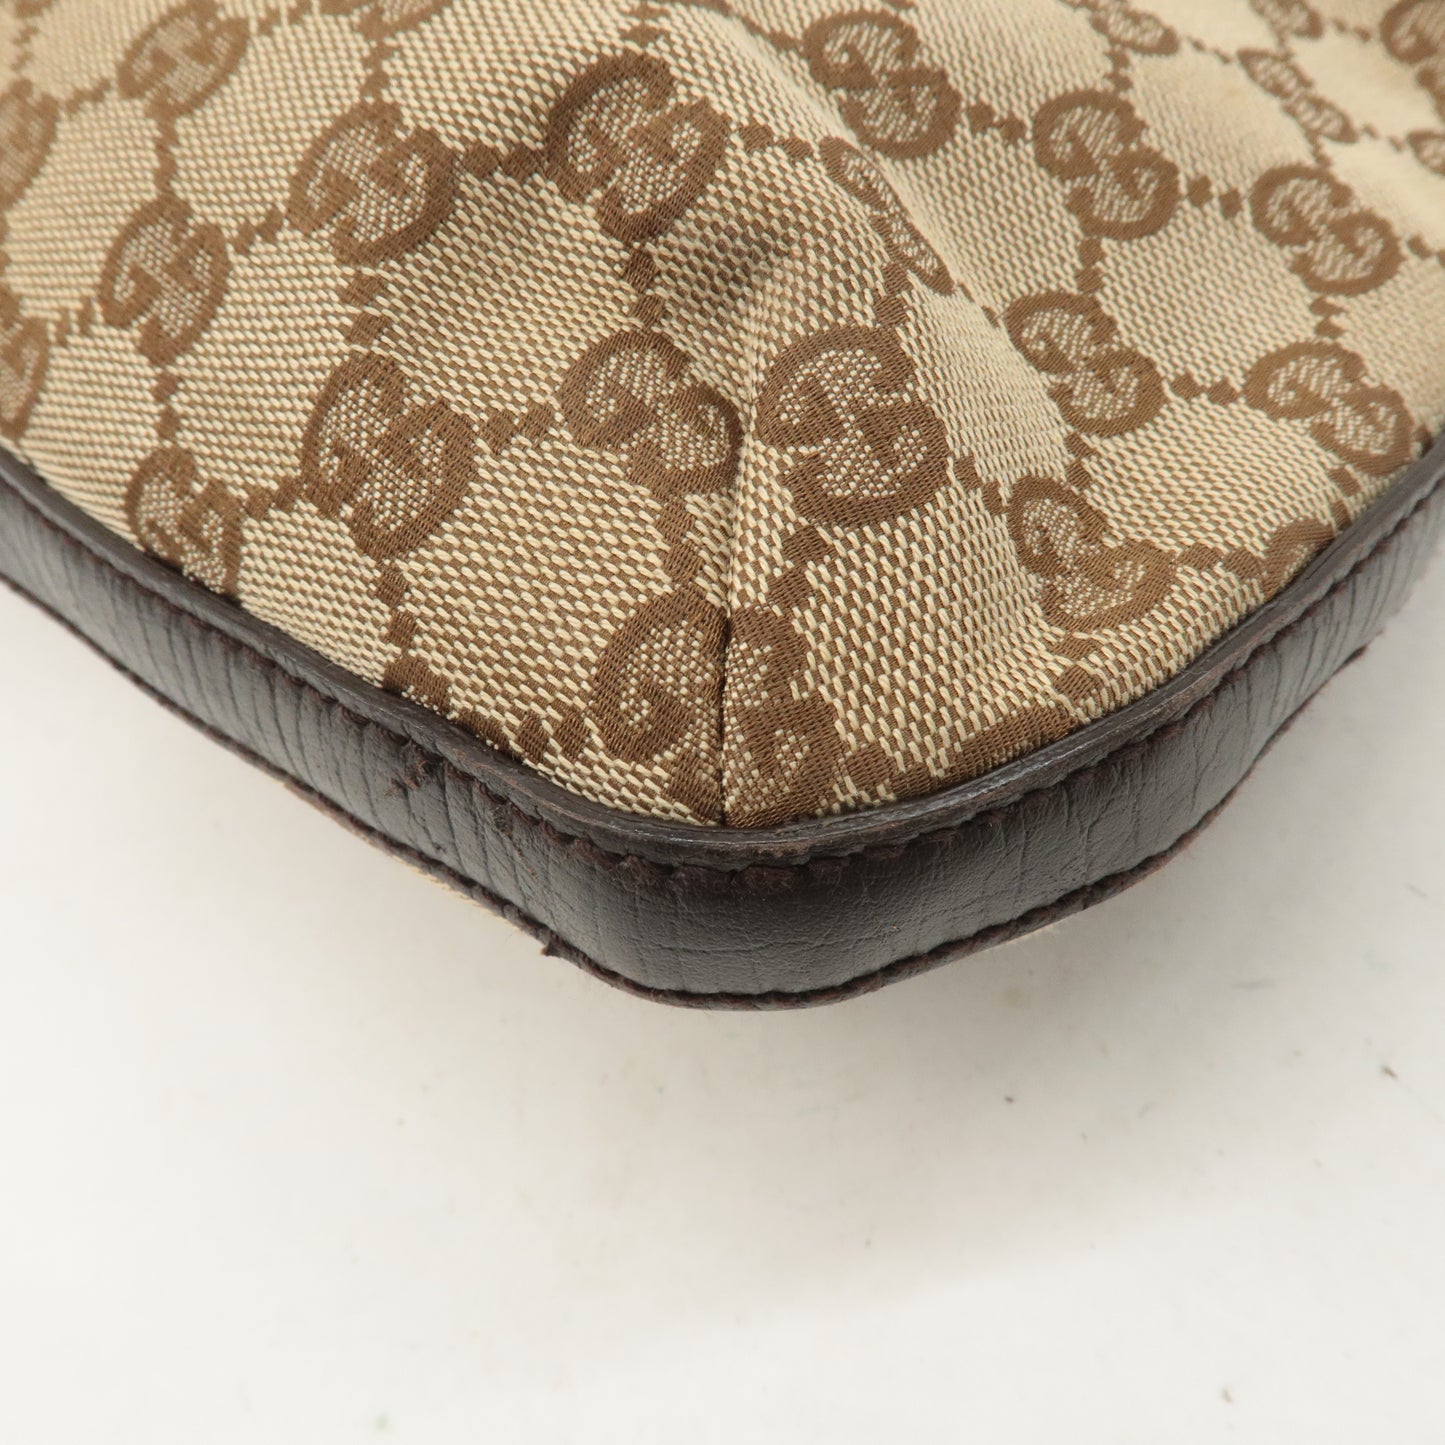 GUCCI Sherry Horsebit GG Canvas Leather Shoulder Bag 137388